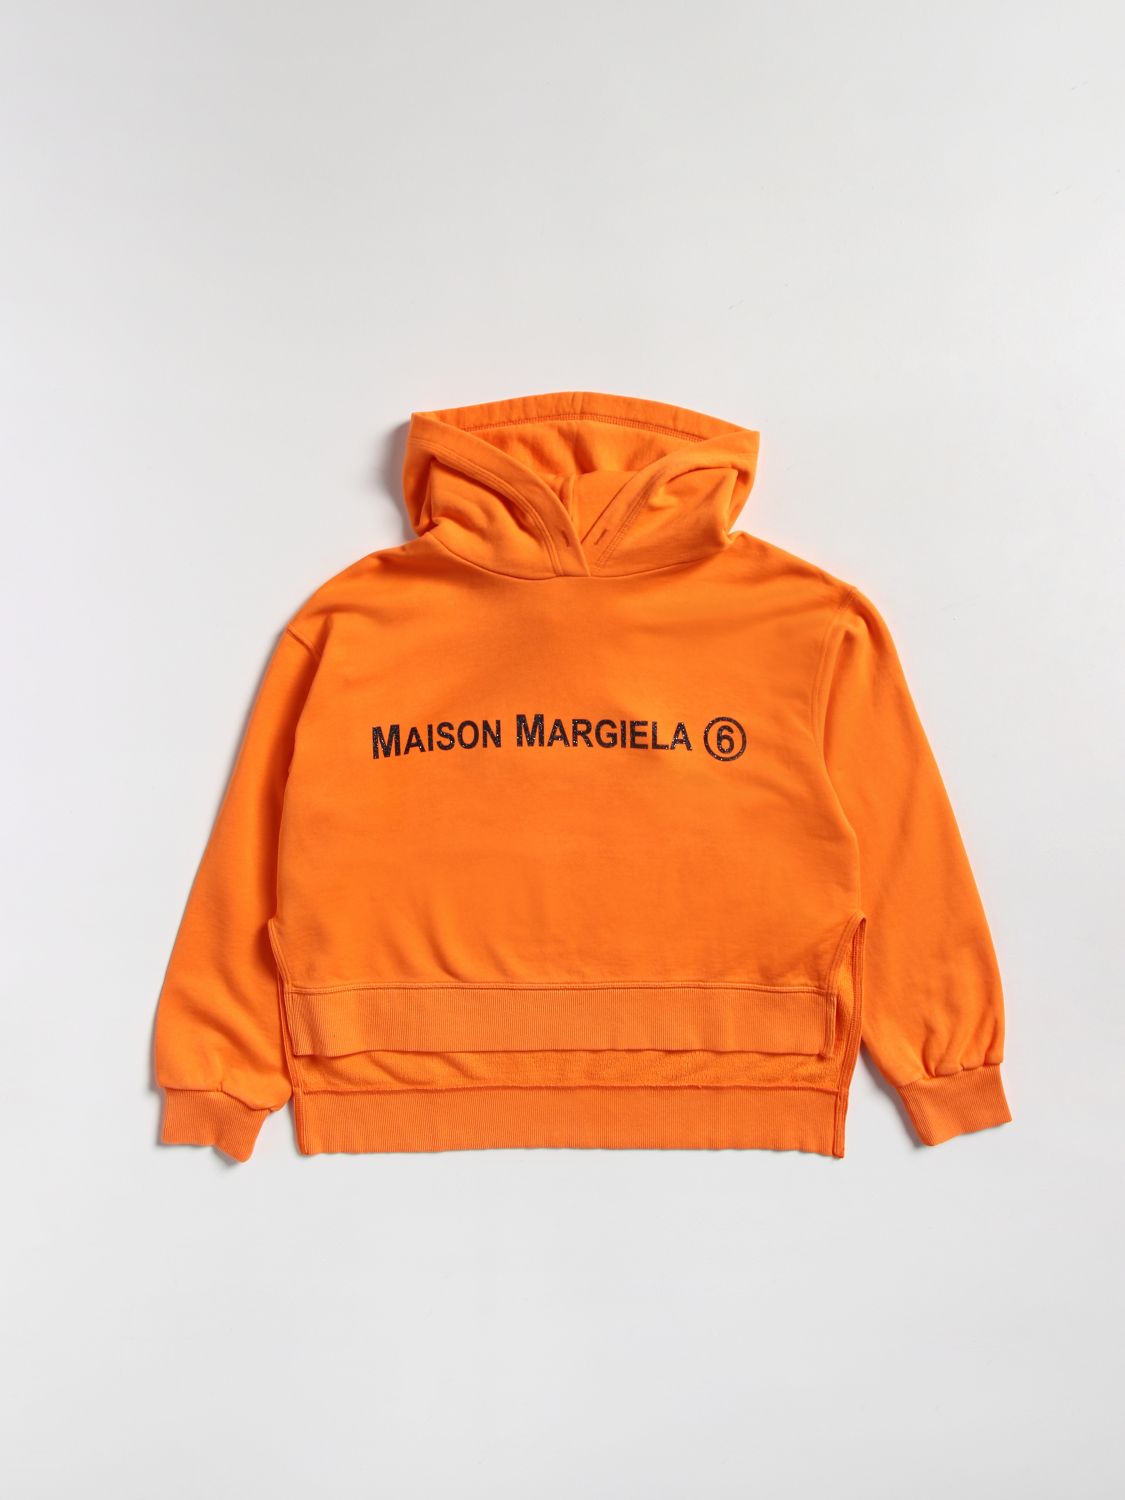 MM6 MAISON MARGIELA SWEATER MM6 MAISON MARGIELA KIDS COLOR ORANGE,c82074004